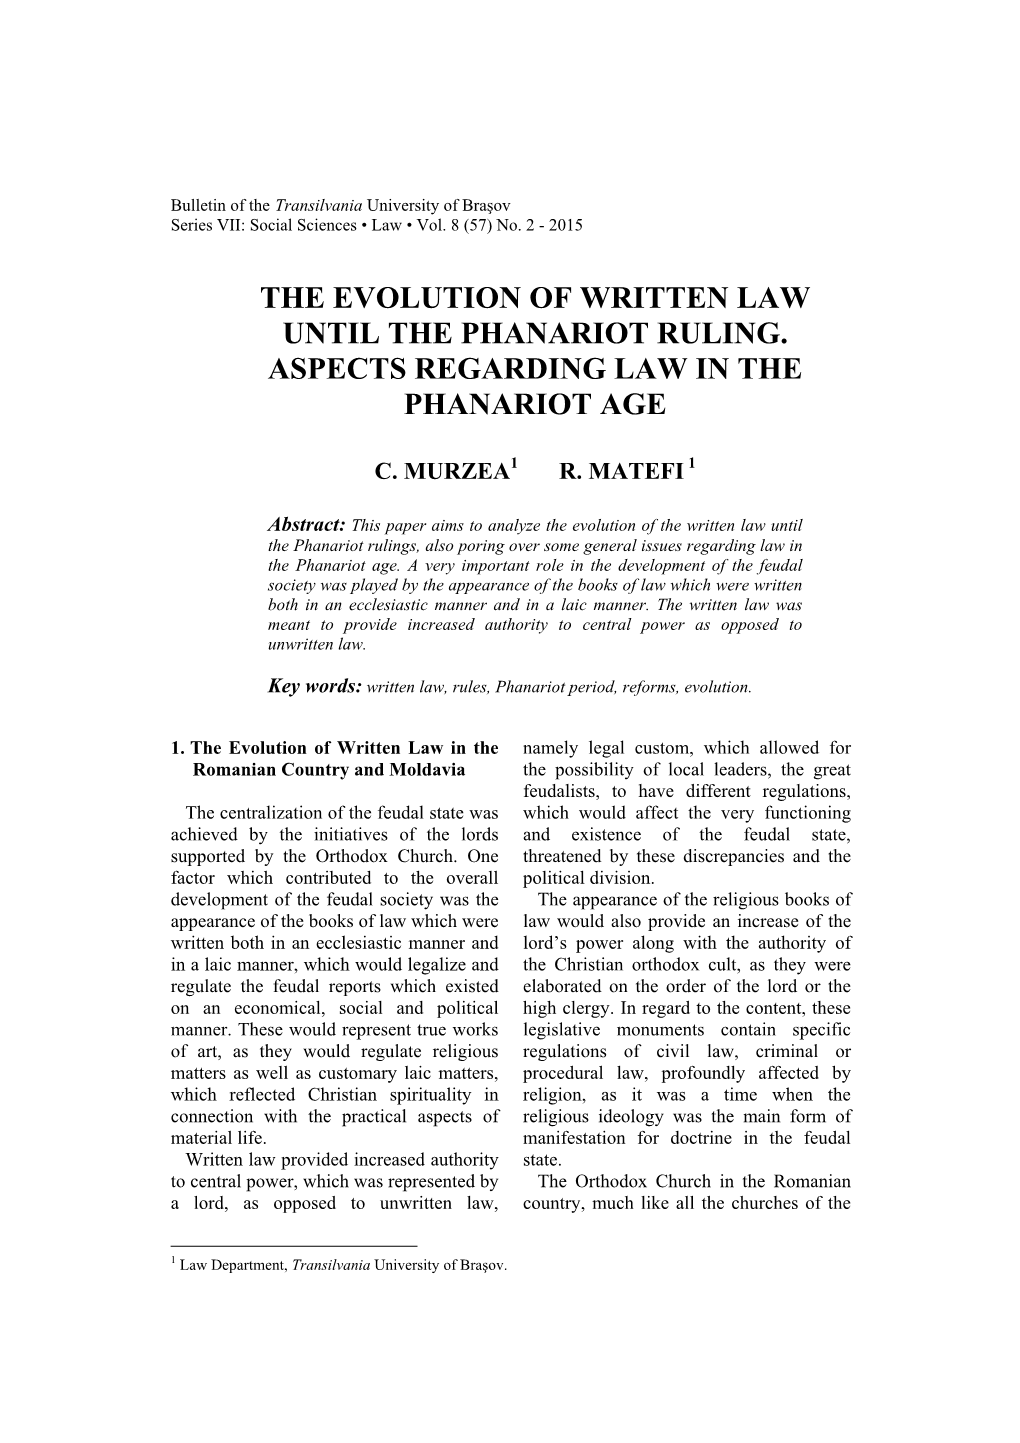 Murzea, C., Matefi, R.: the Evolution of Written Law Until the Phanariot